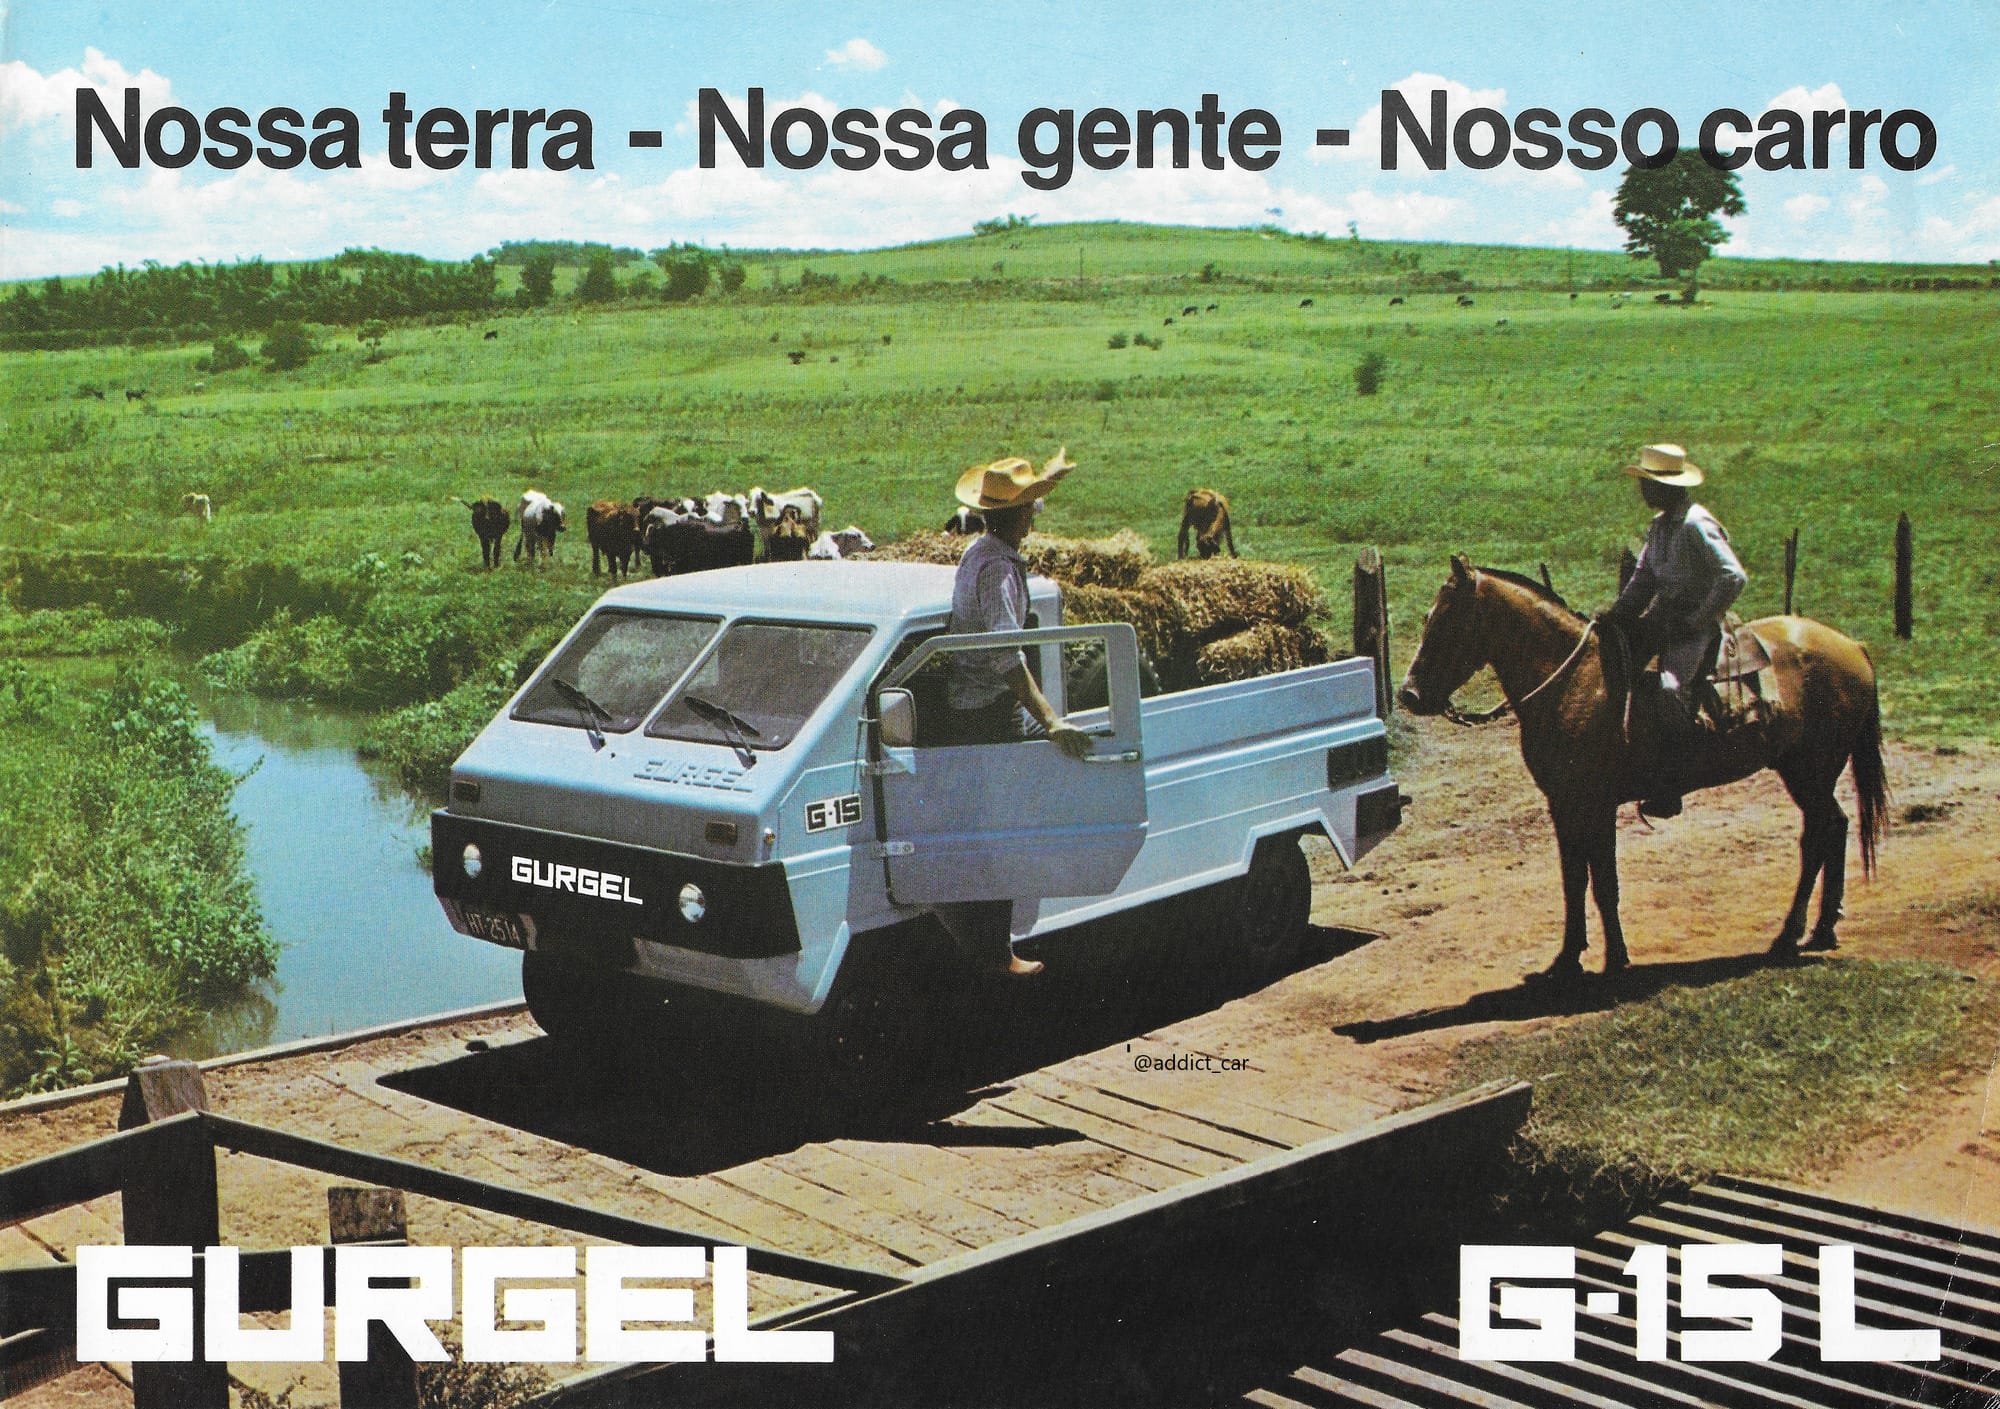 Gurgel X-15